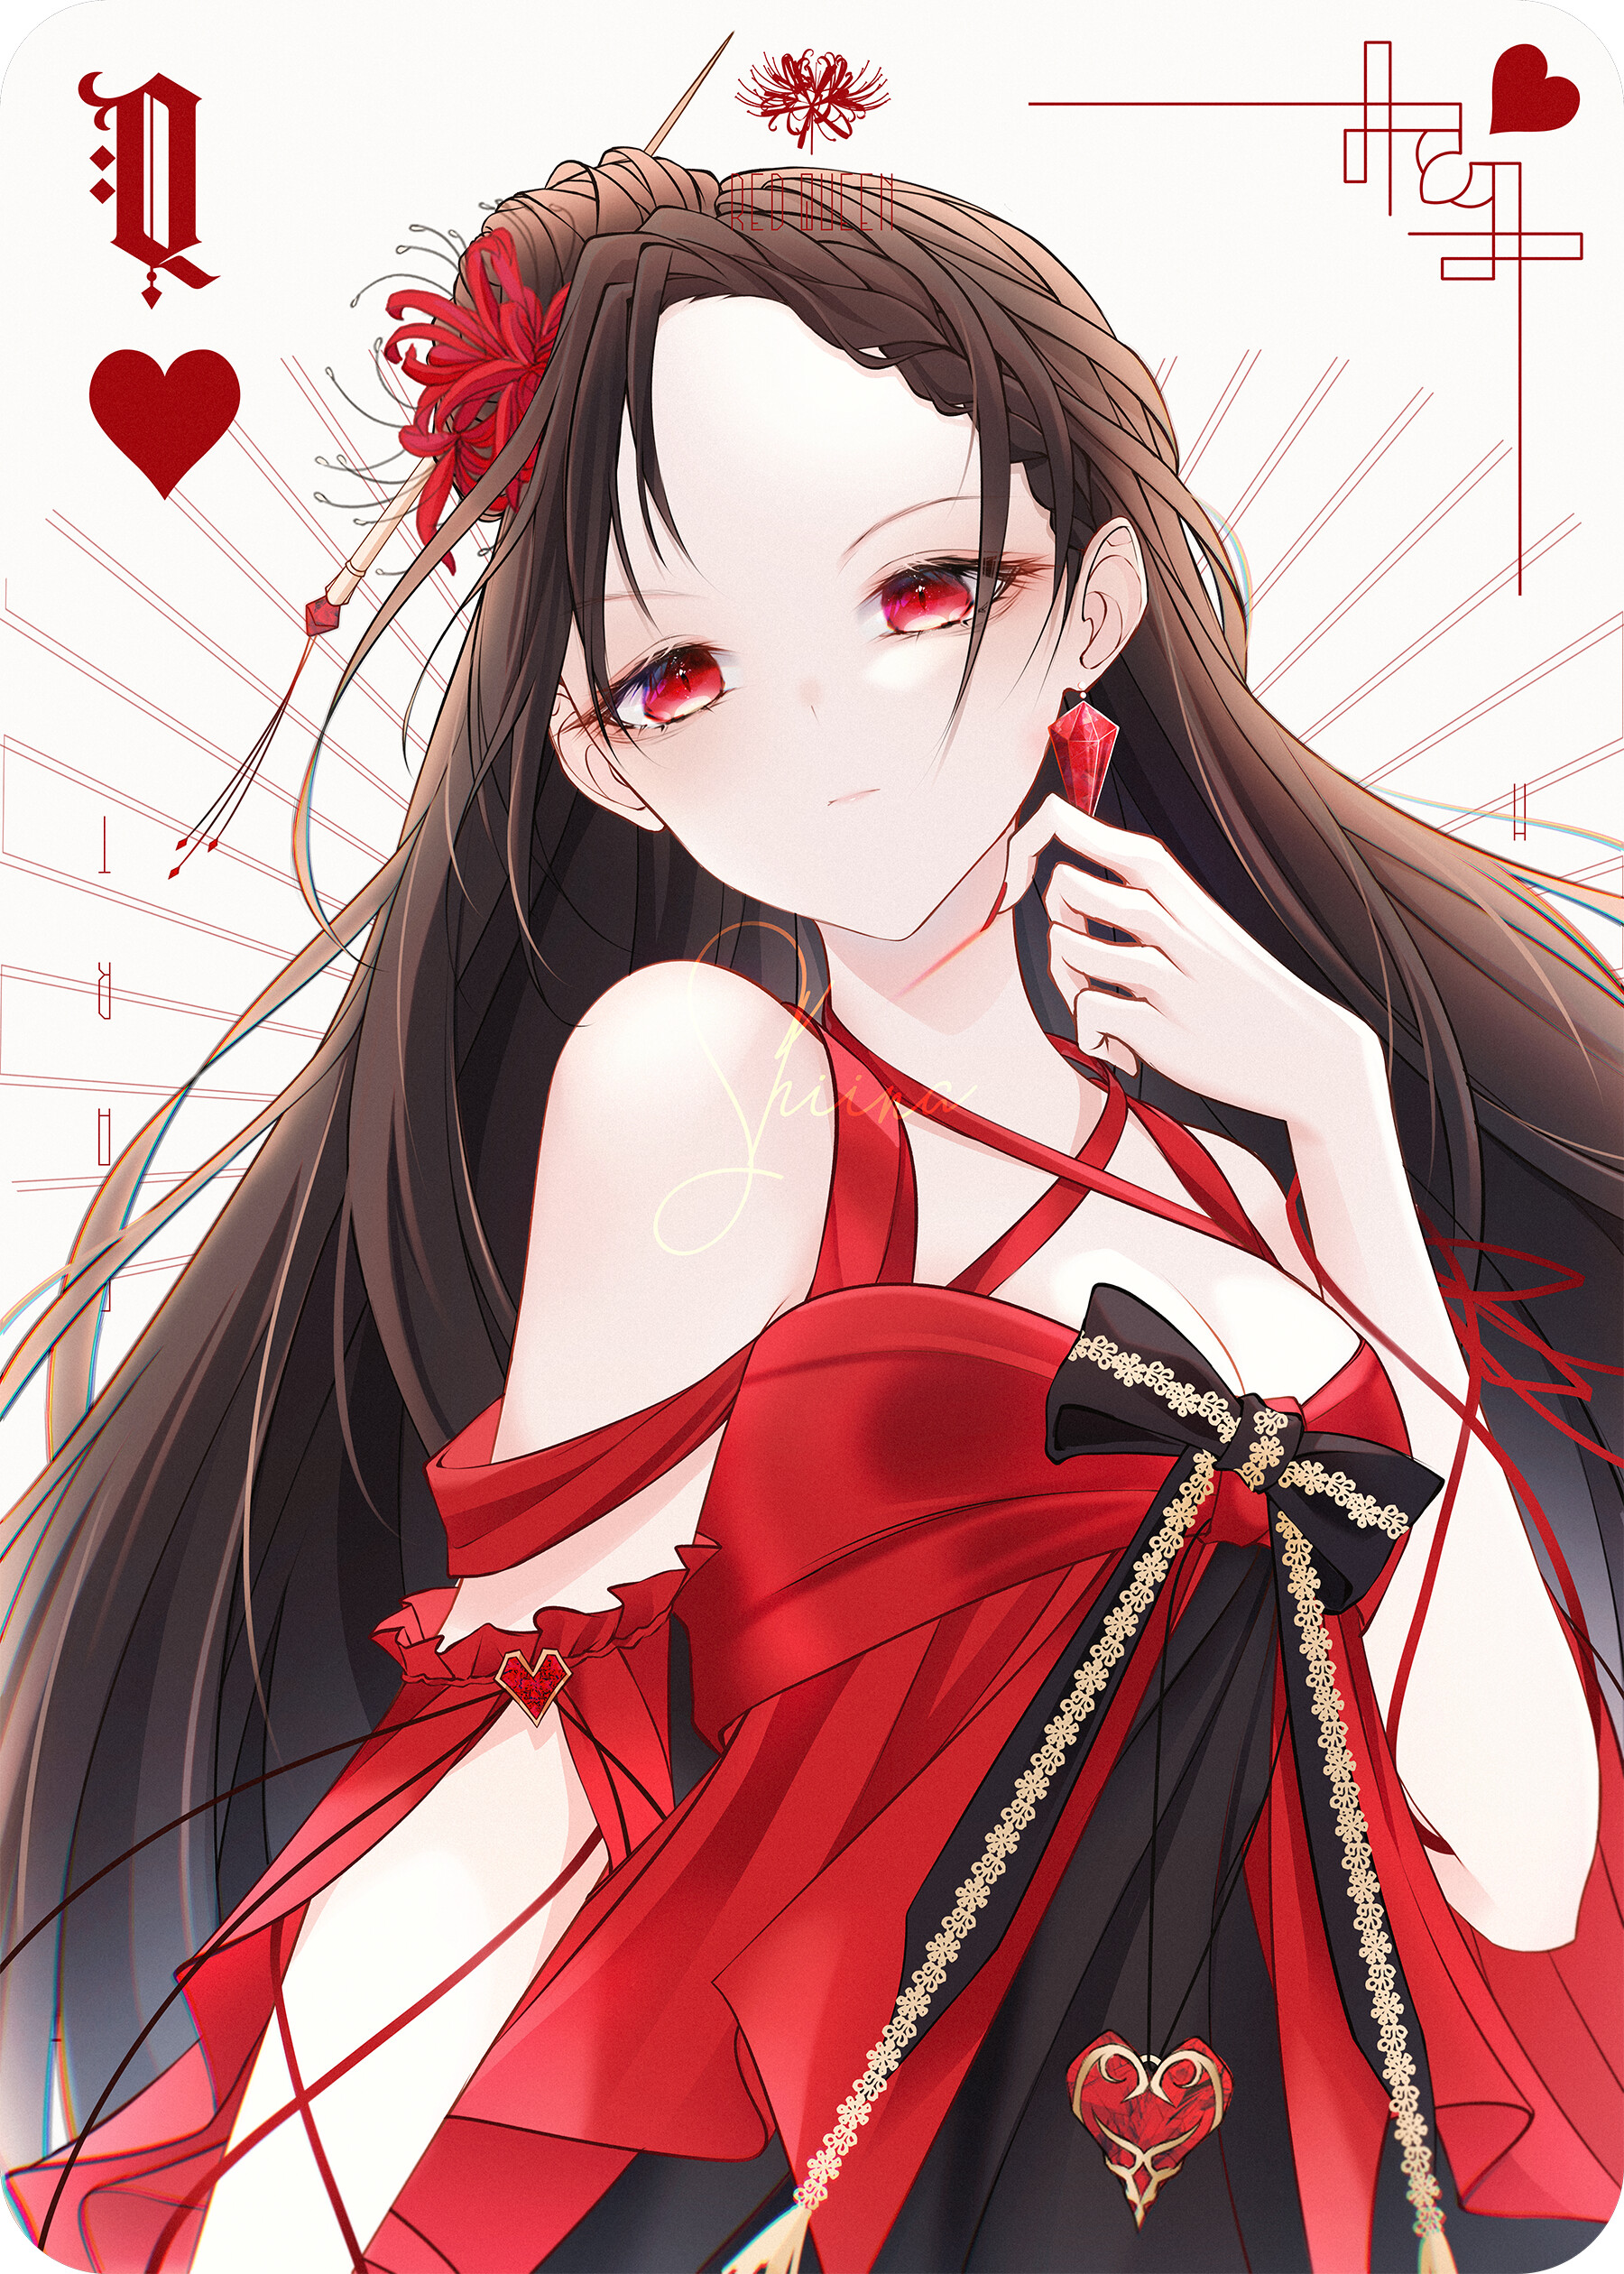 Queen of Hearts  Other  Anime Background Wallpapers on Desktop Nexus  Image 2139298